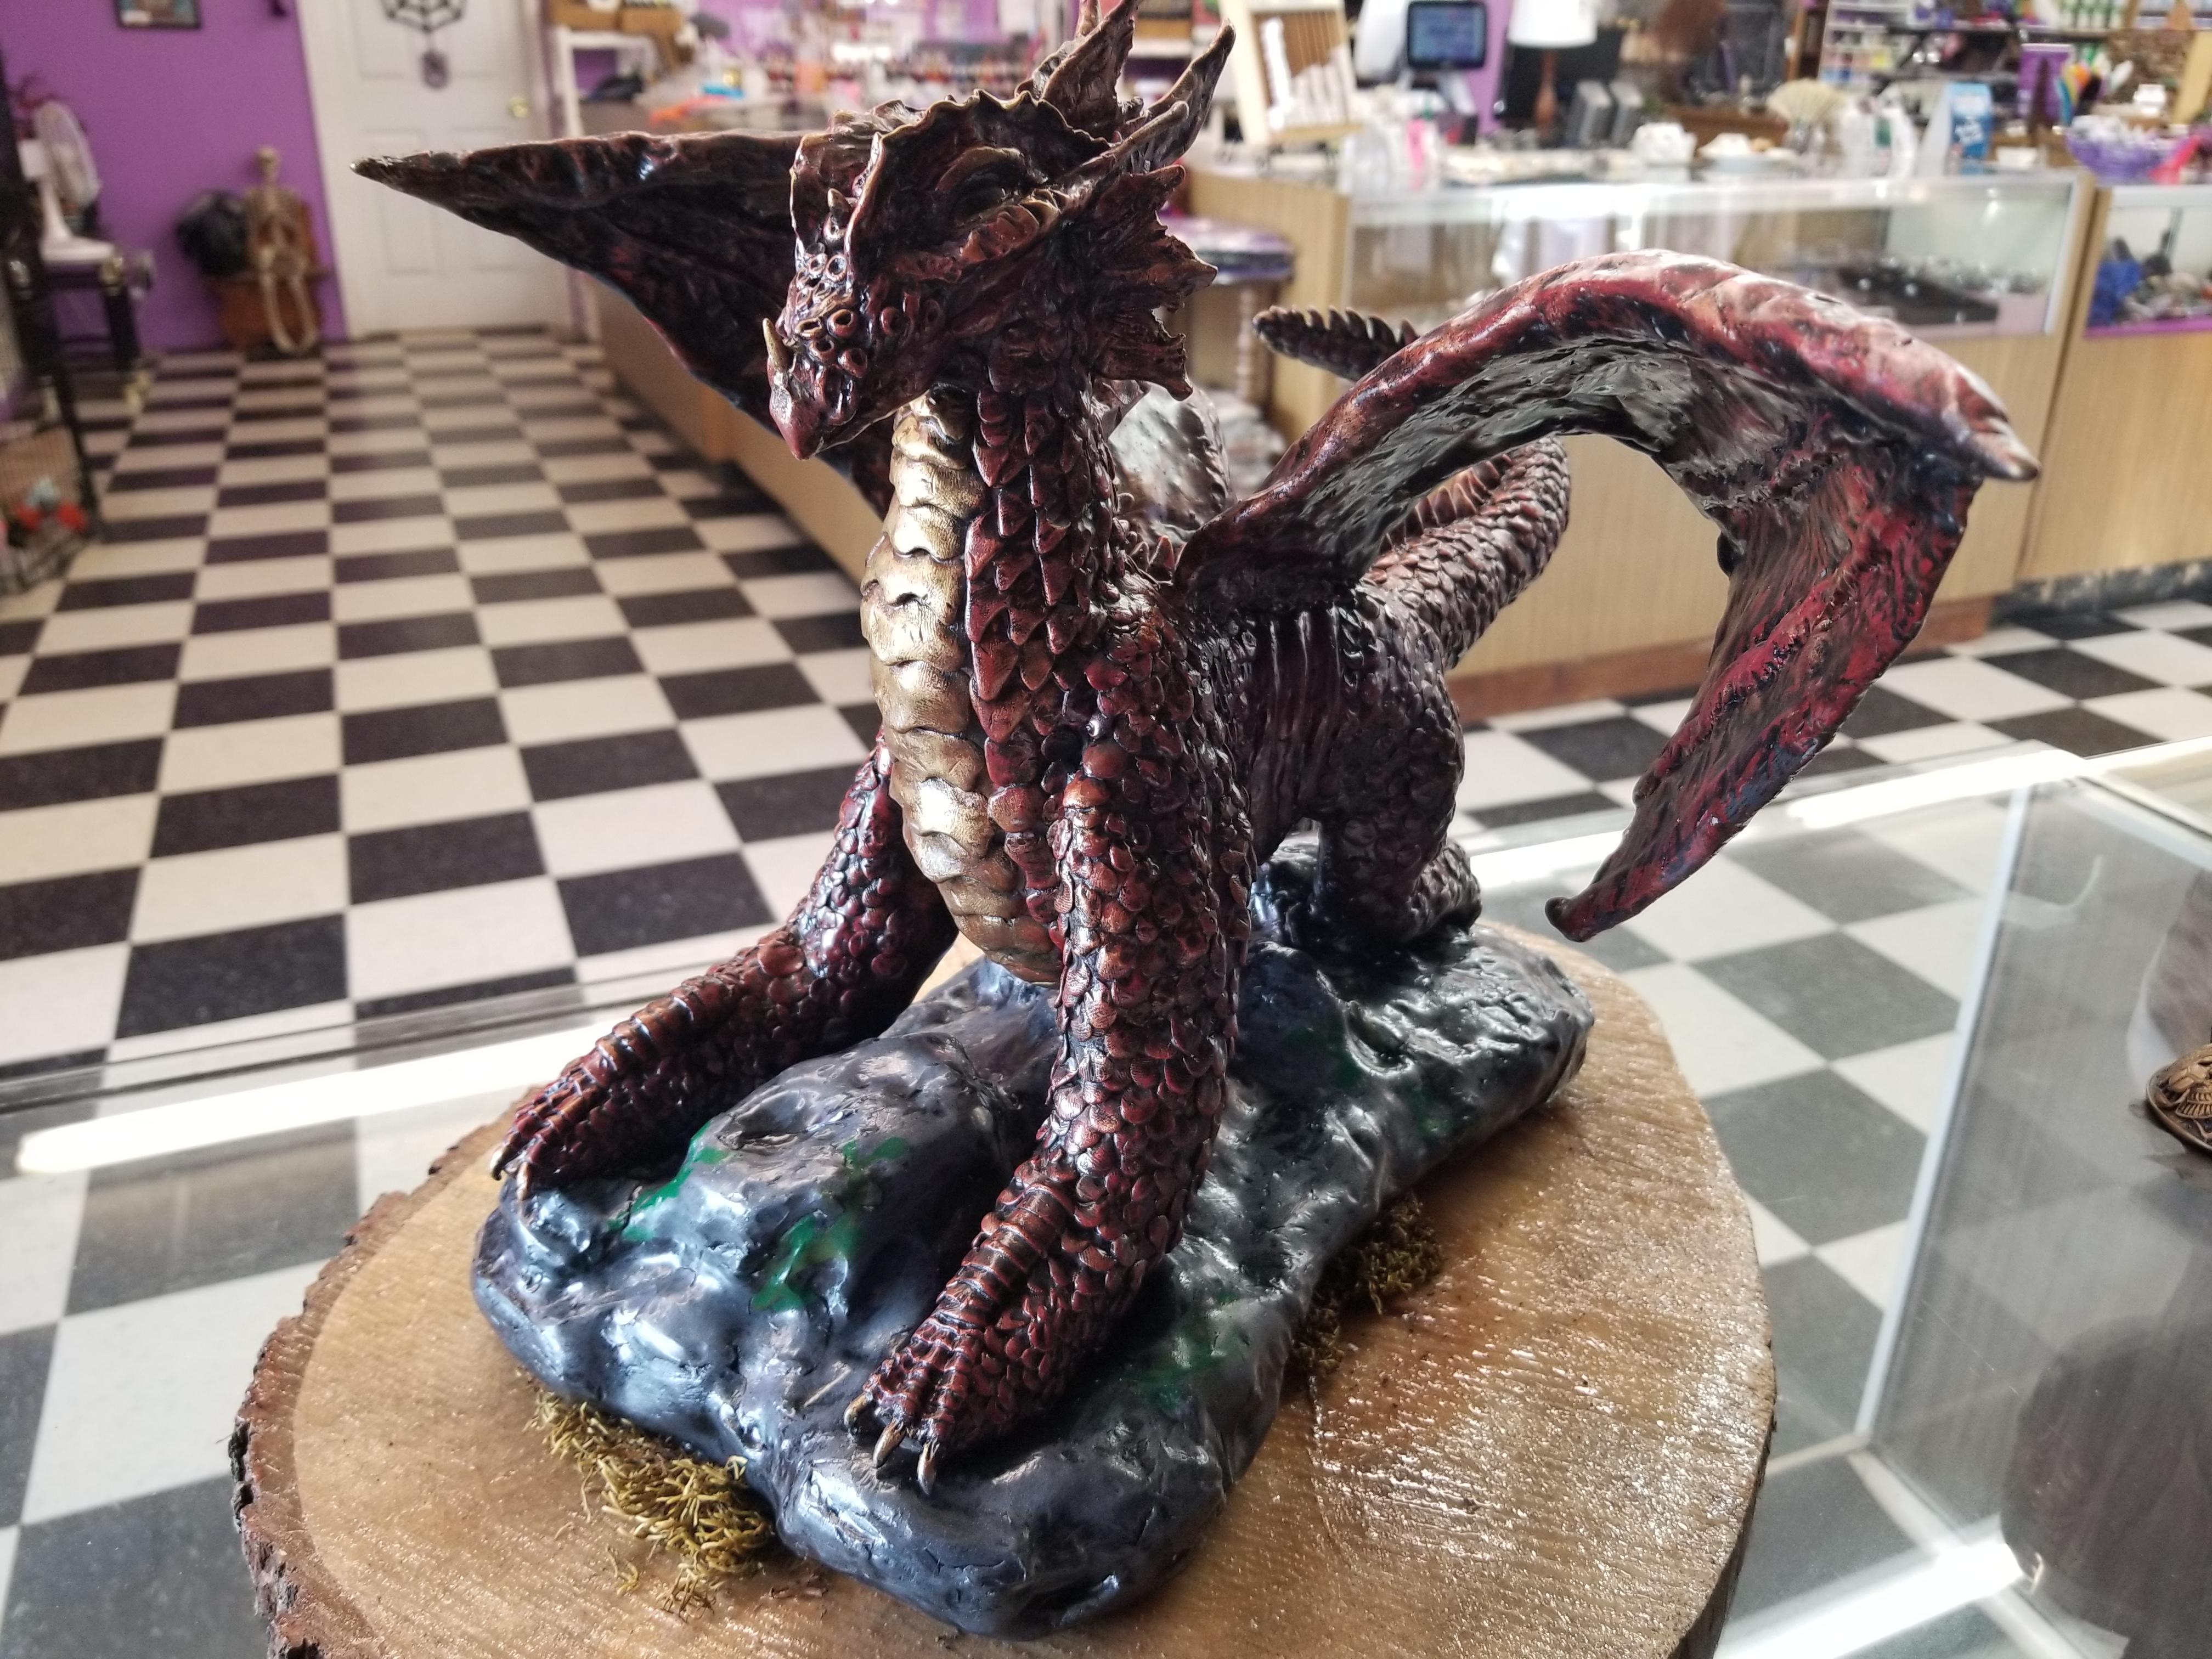 Red Dragon Statue